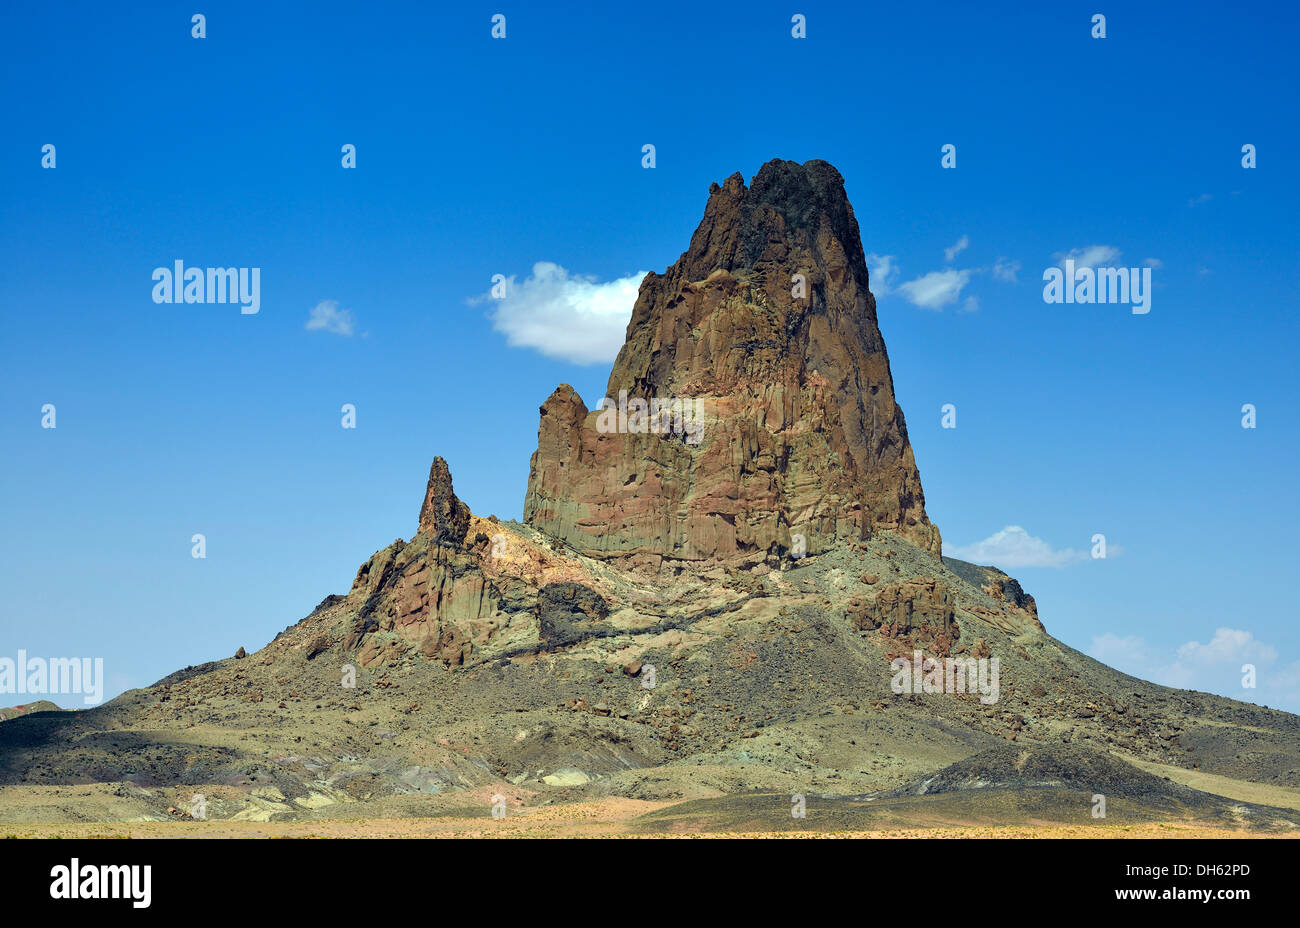 Shiprock monolito montagna sacra degli indiani Navajo, in rotta verso Monument Valley Navajo Tribal Park Foto Stock